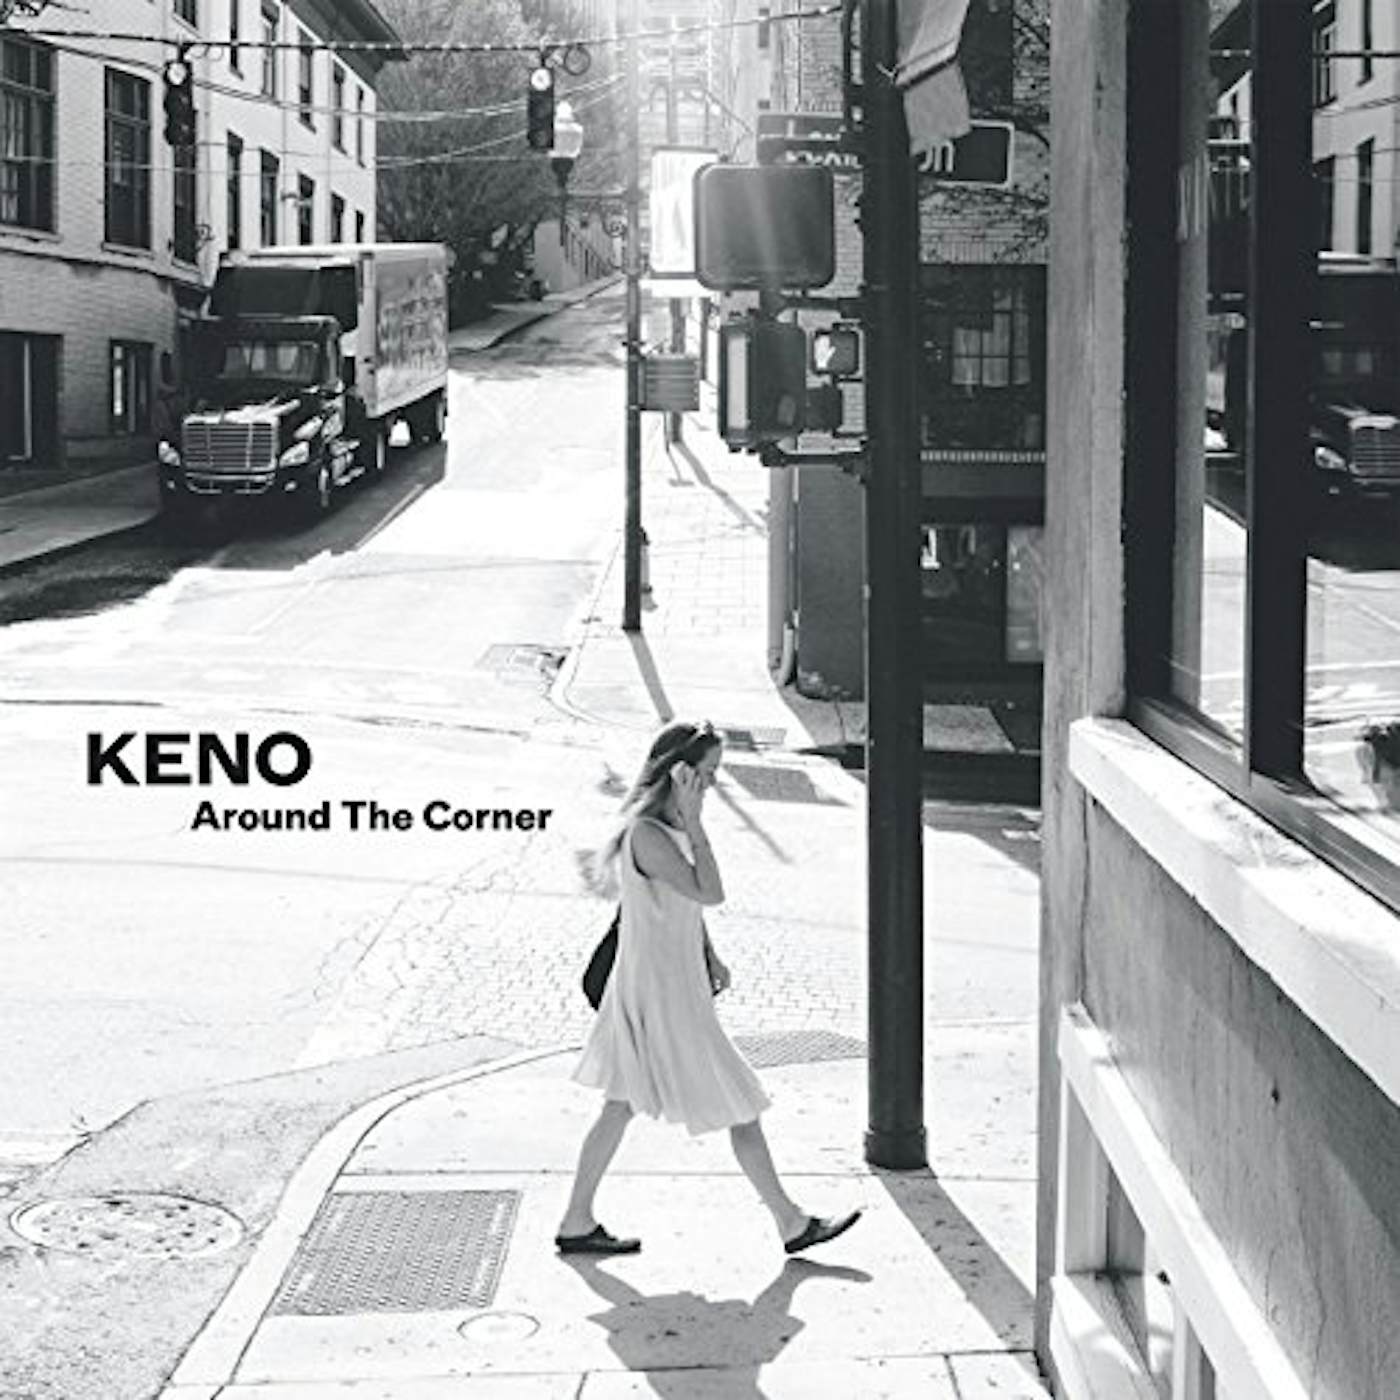 Keno Around The Corner Vinyl Record